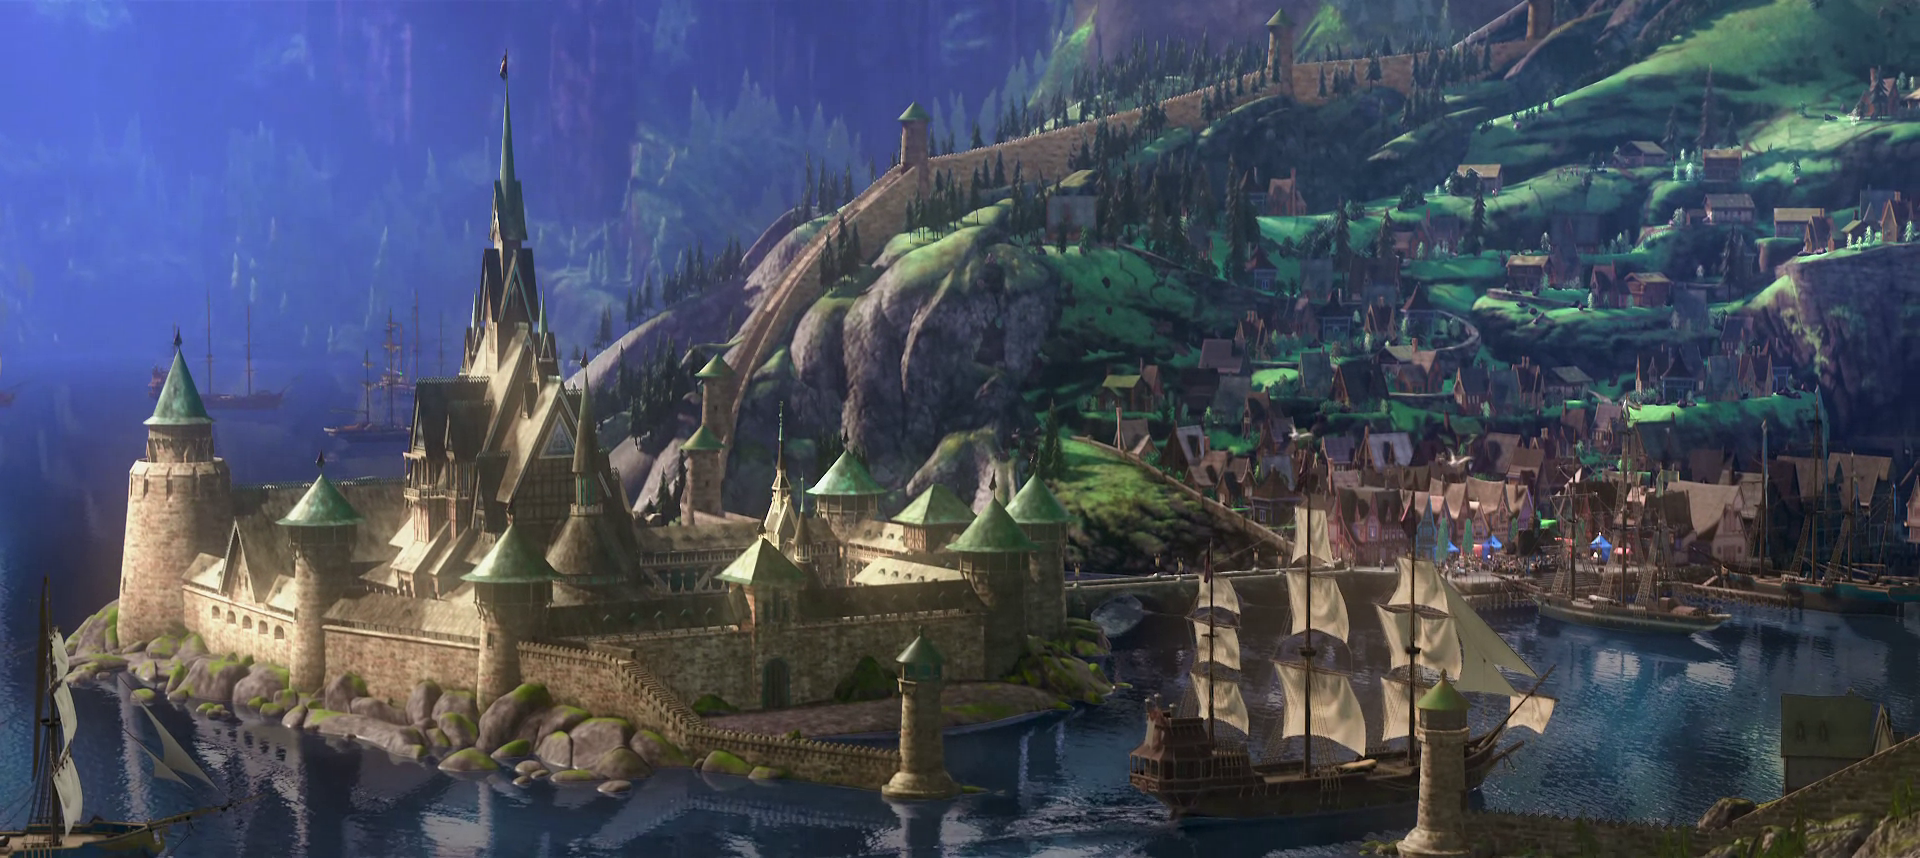 Top Disney Castles Arendelle Frozen Story